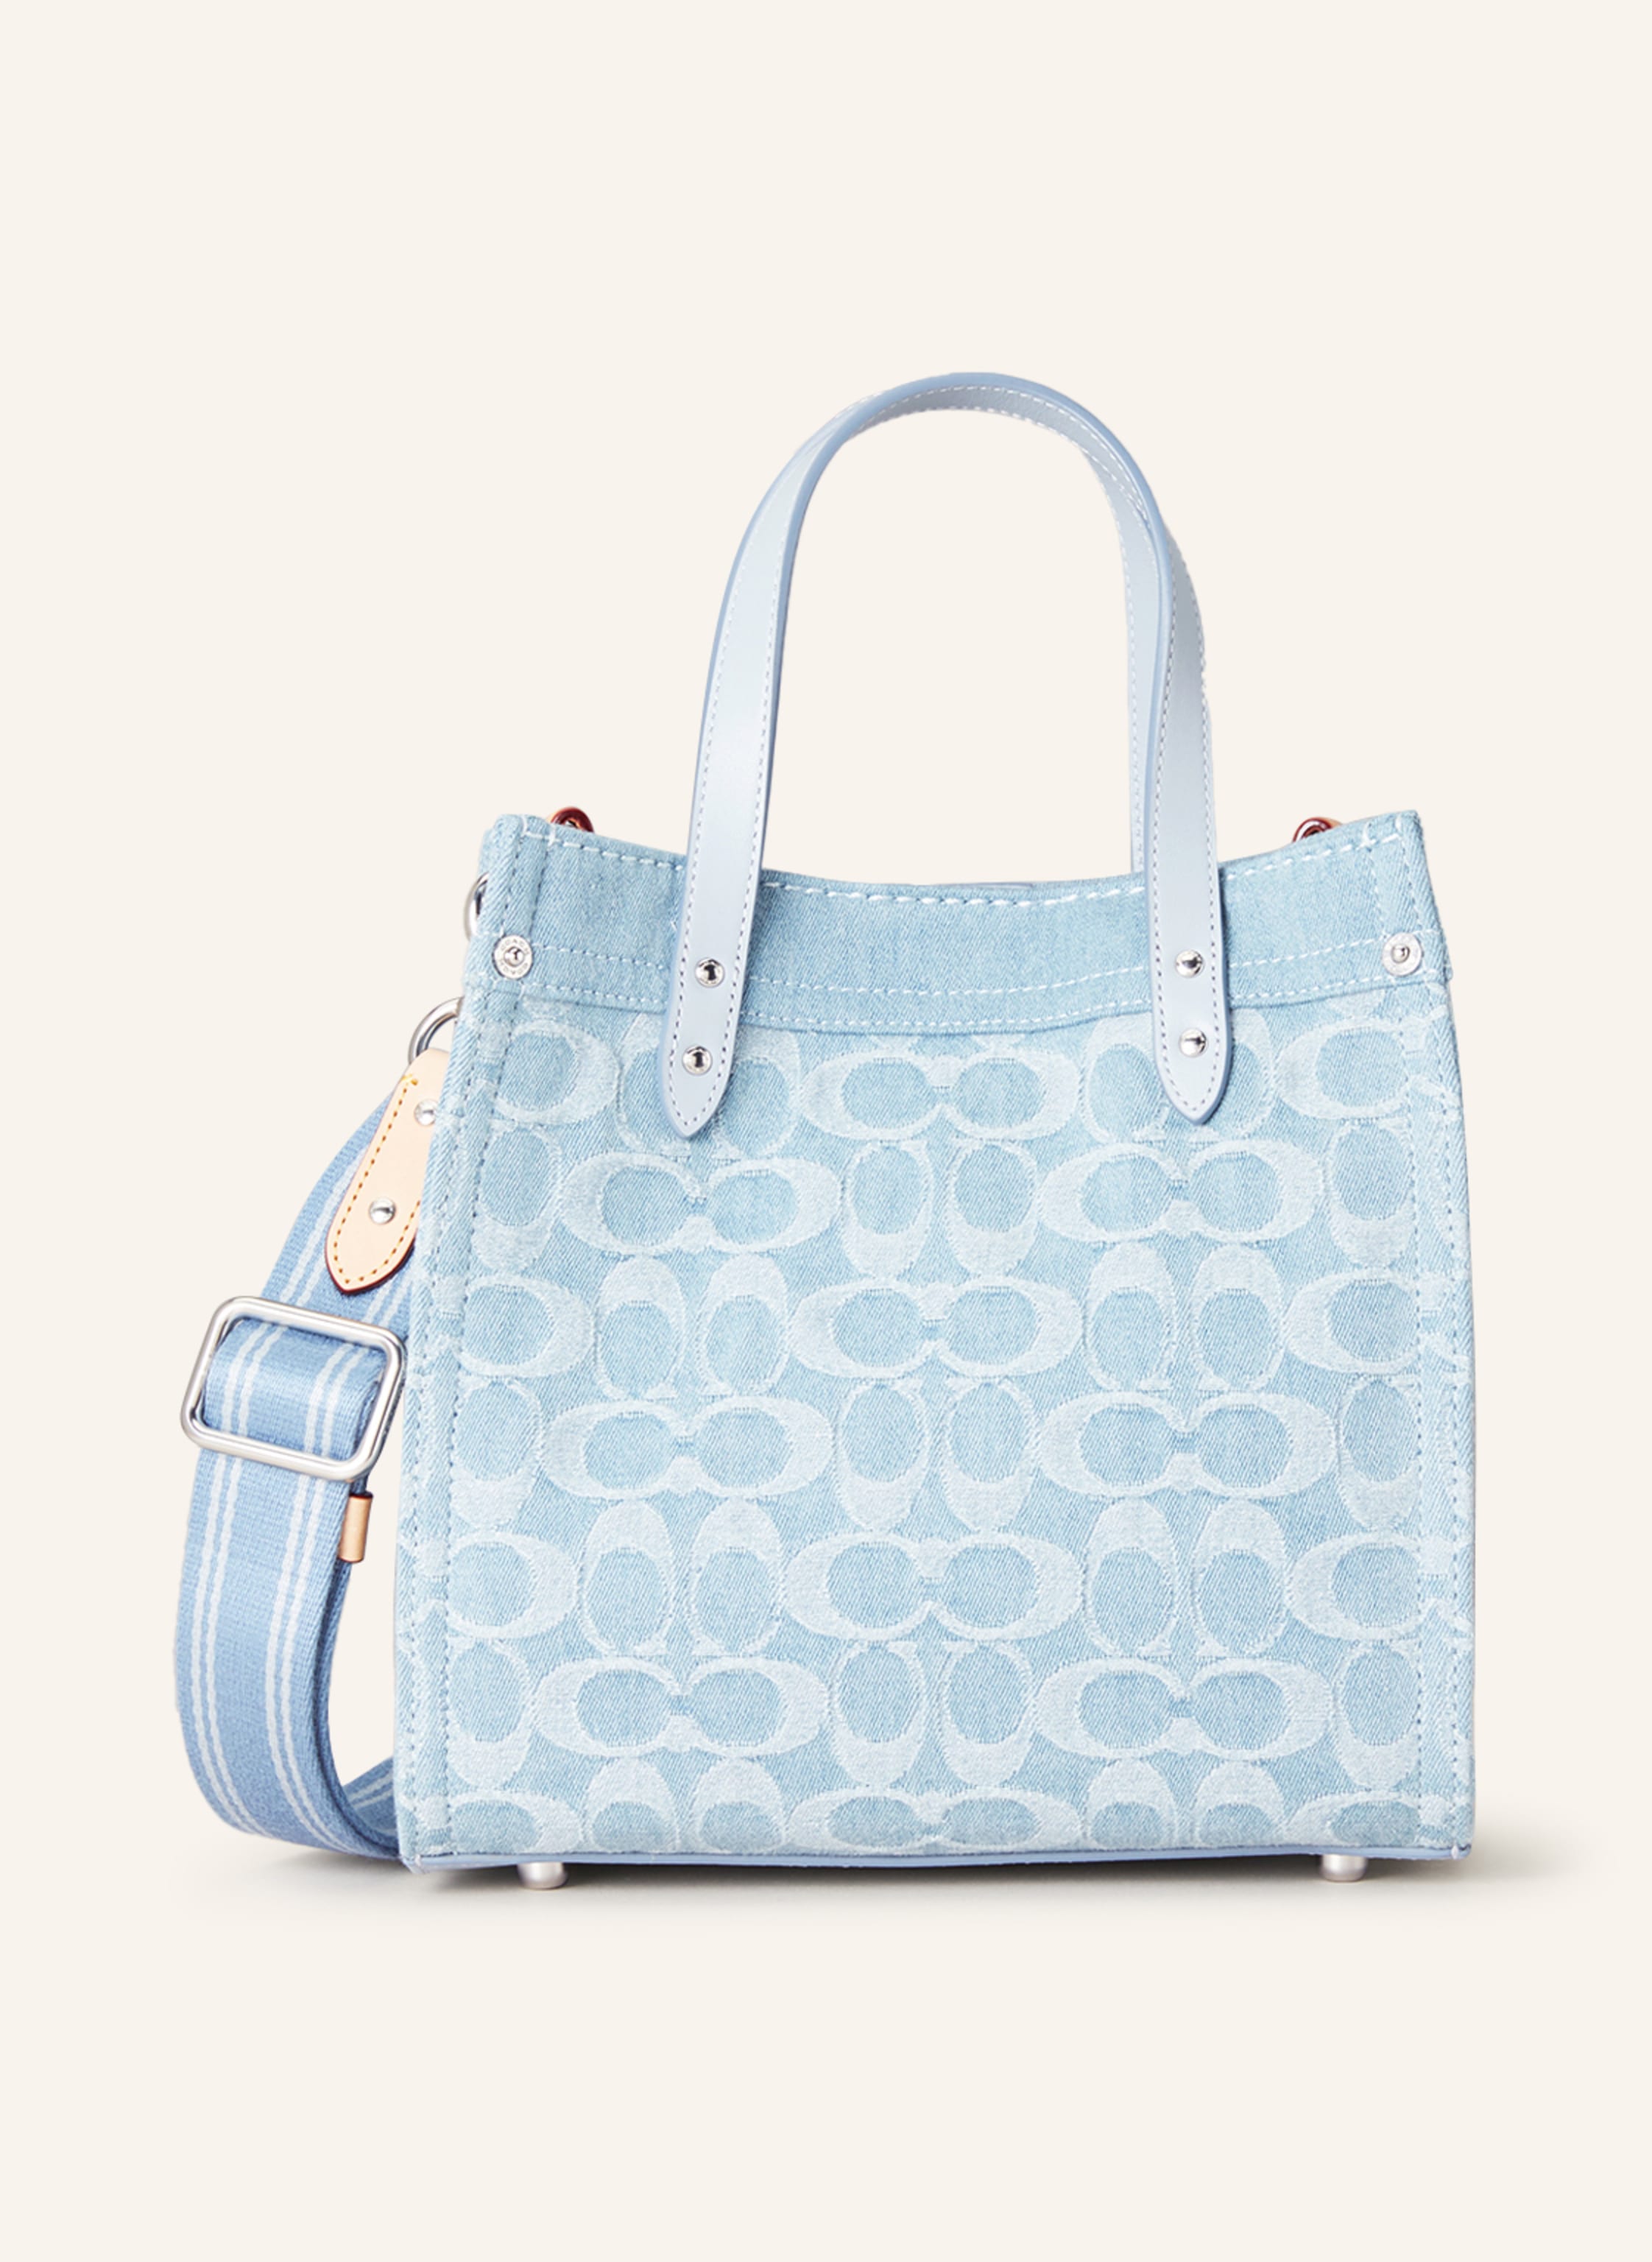 Shop Blue Coach Bag online | Lazada.com.ph